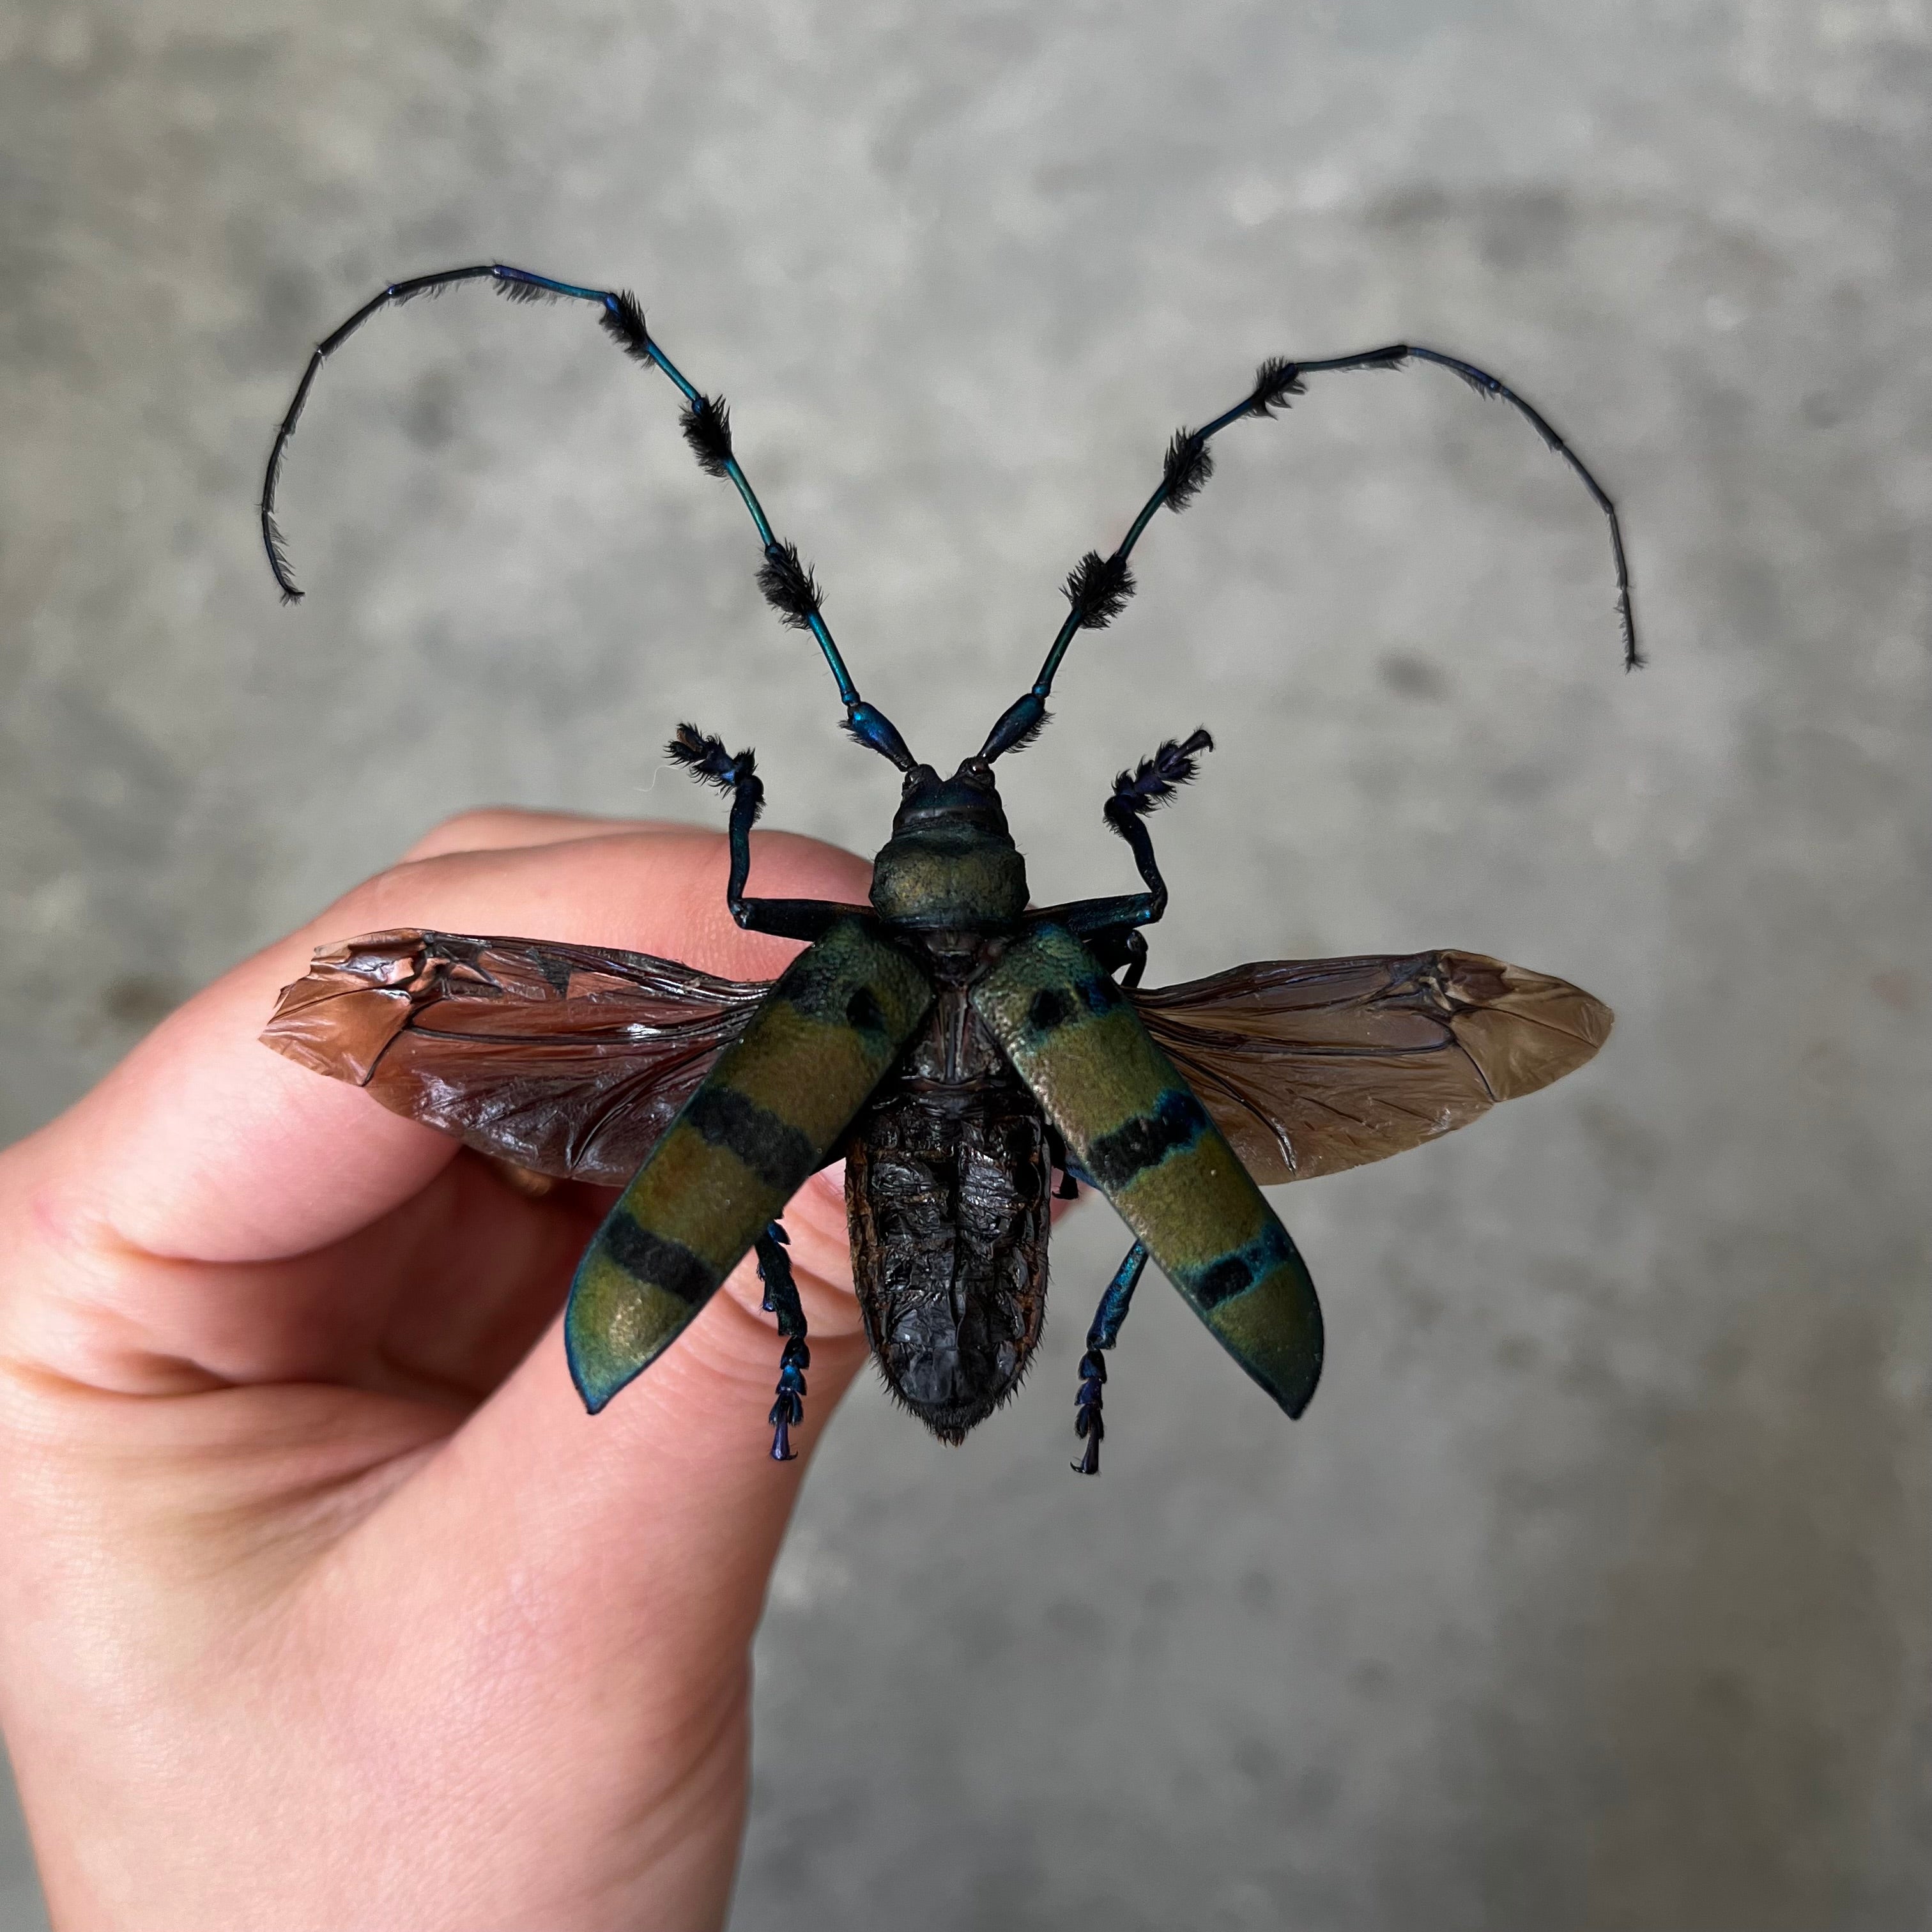 REAL Diastocera wallichi Longhorn Beetle, unmounted/unspread - Little Caterpillar Art Little Caterpillar Art  